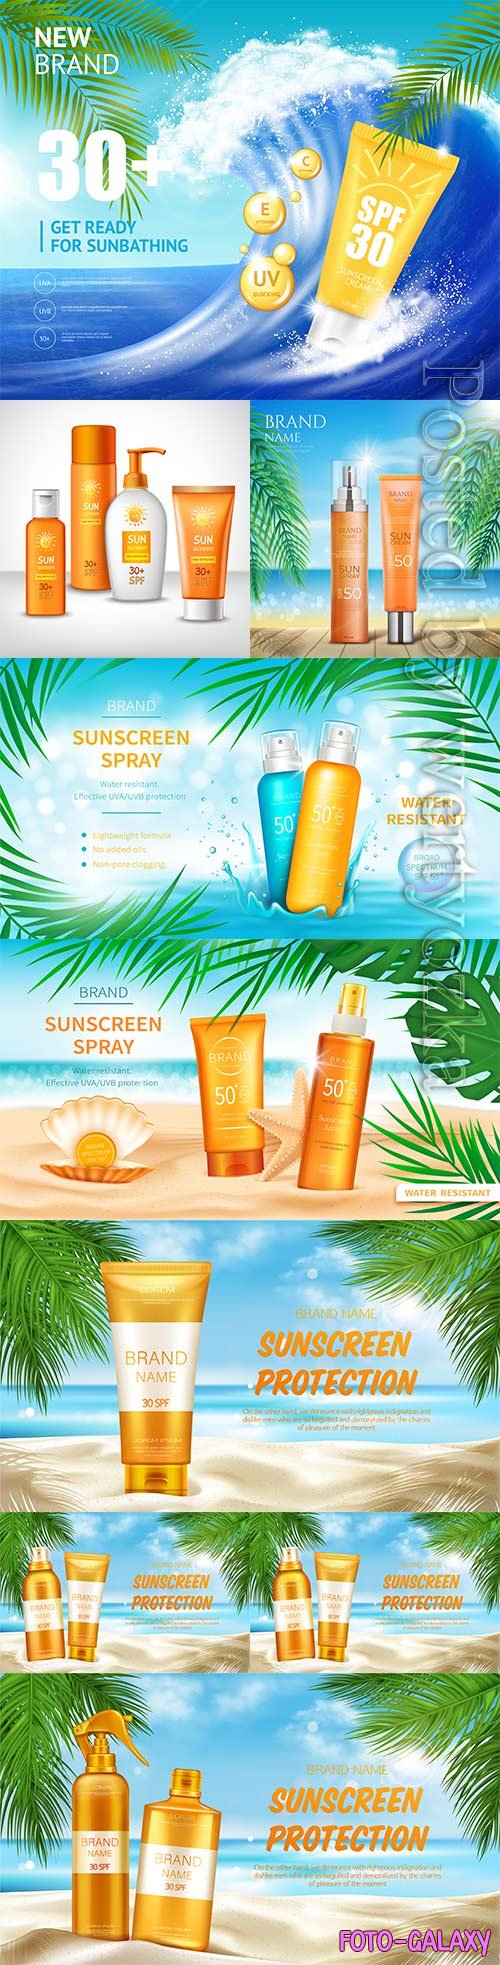 Sunscreen protection vector cosmetics